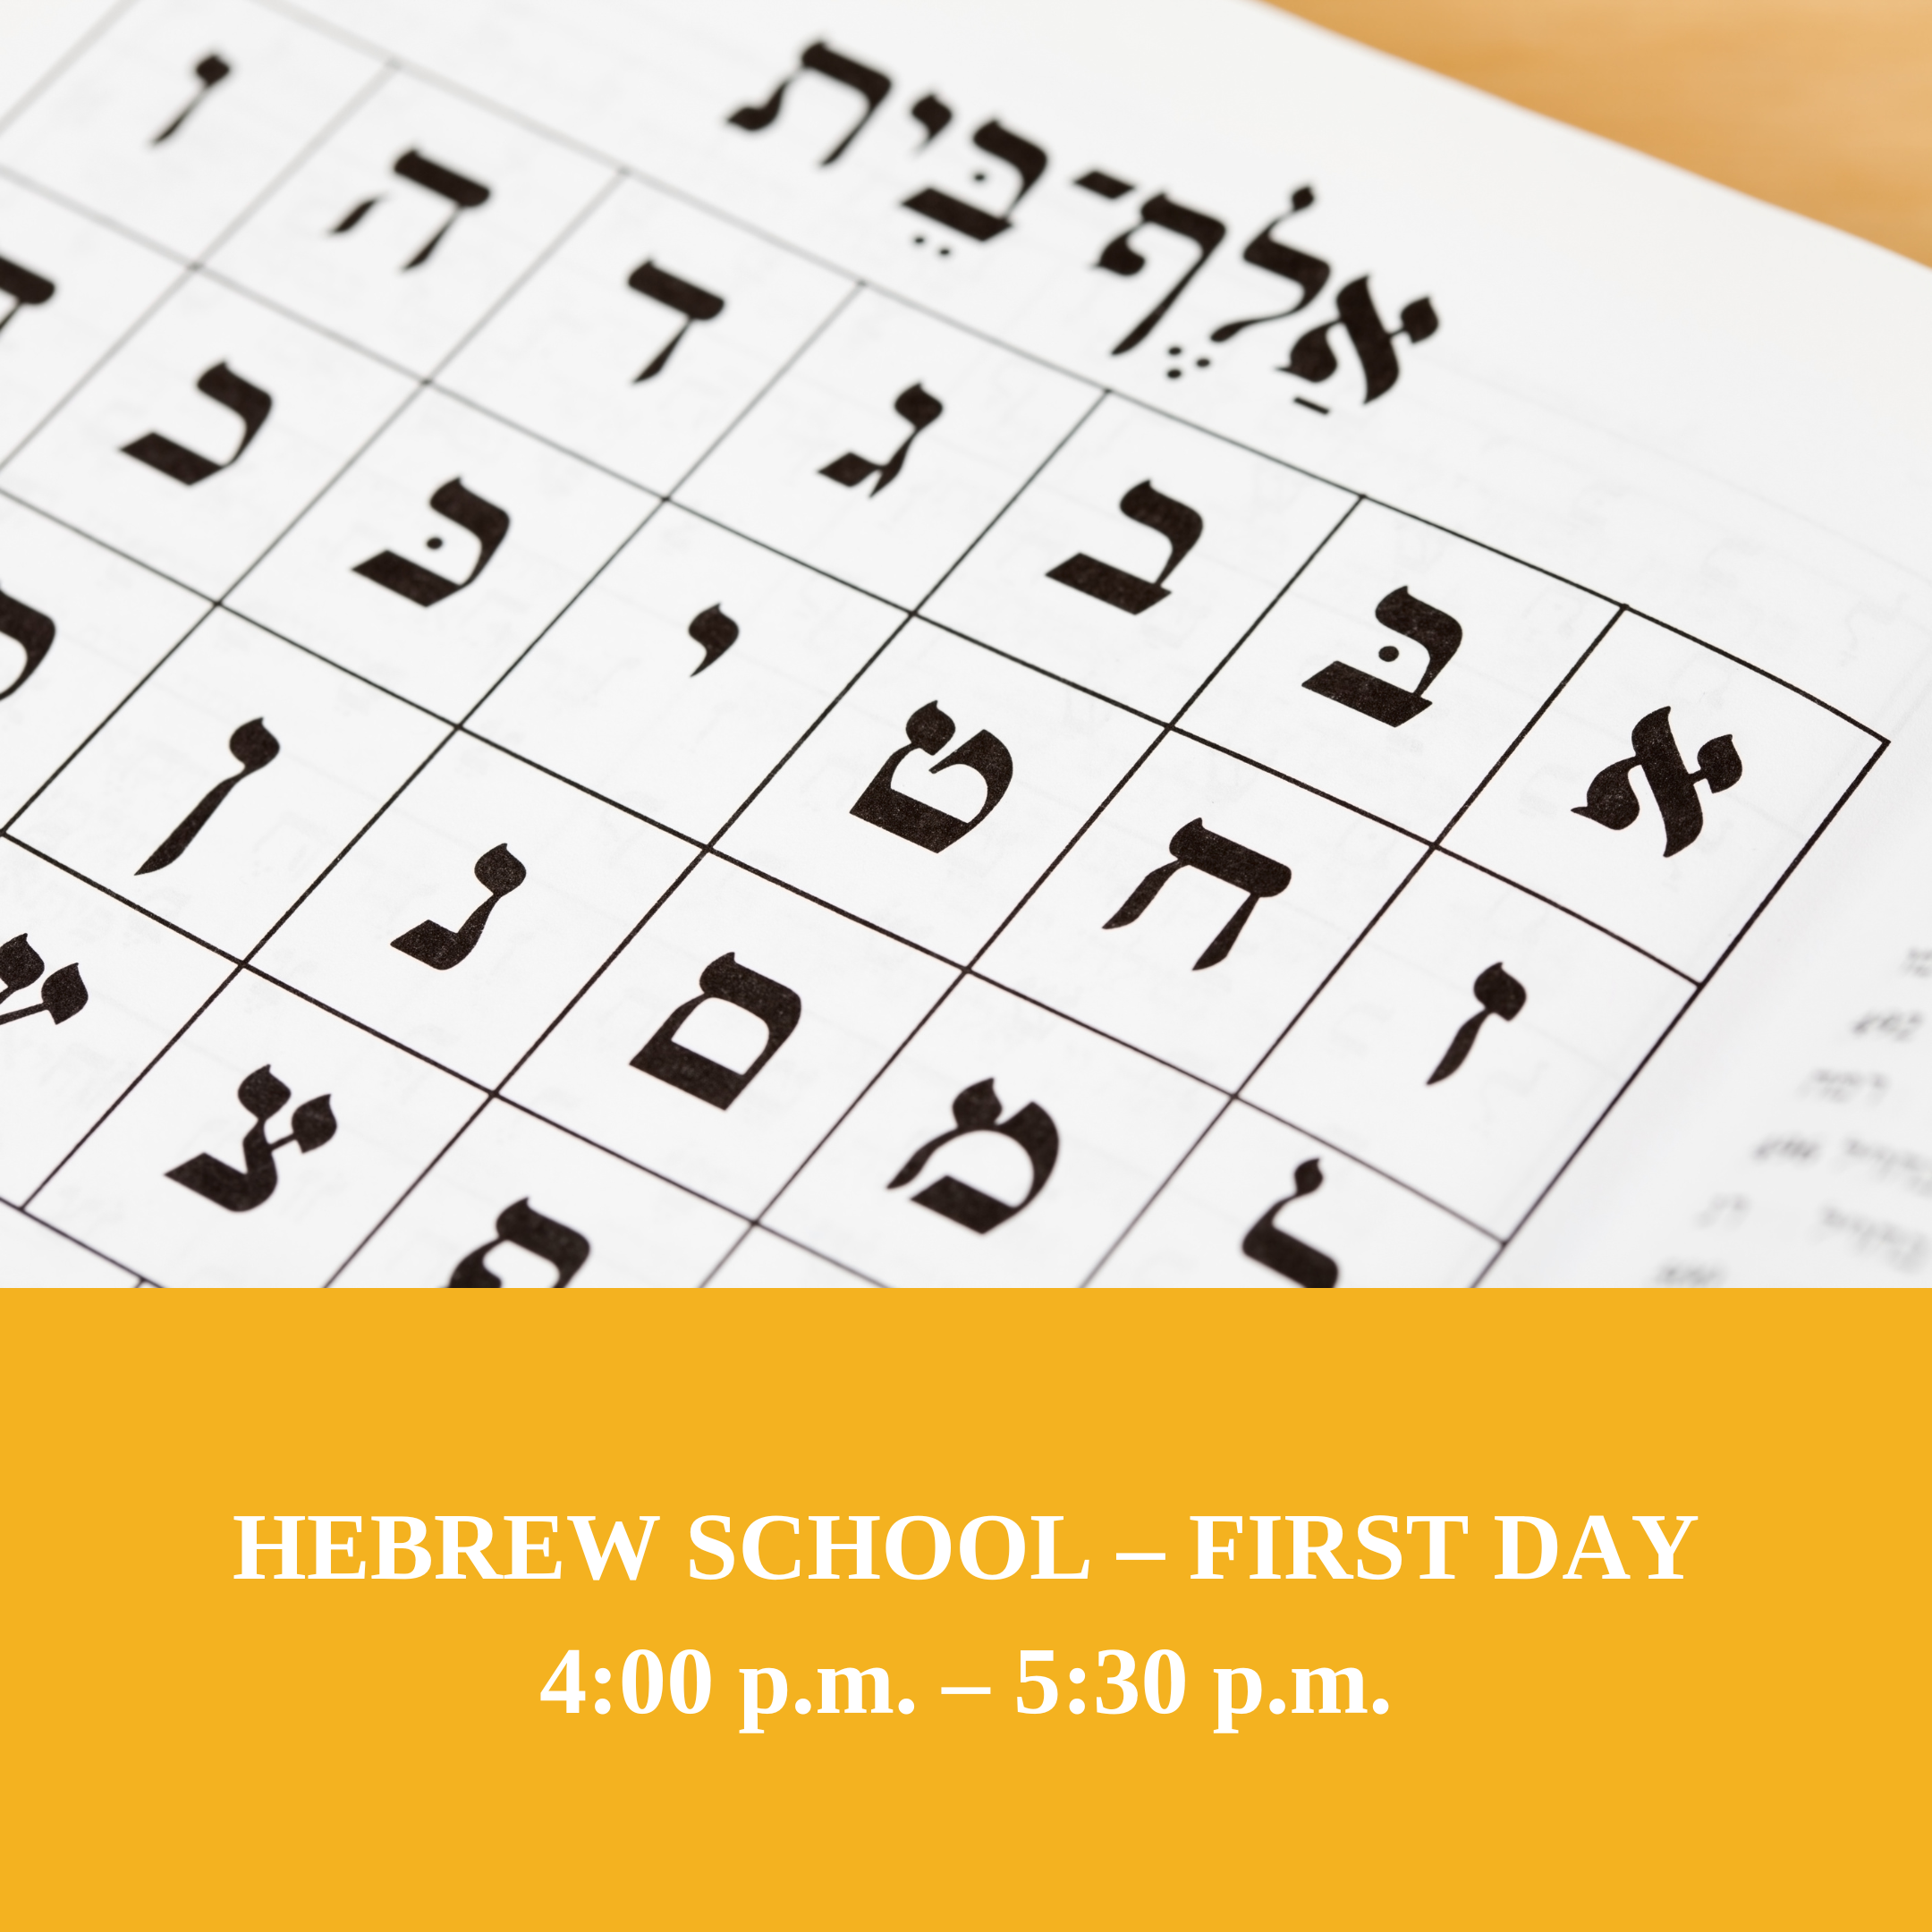 HEBREW SCHOOL – FIRST DAY